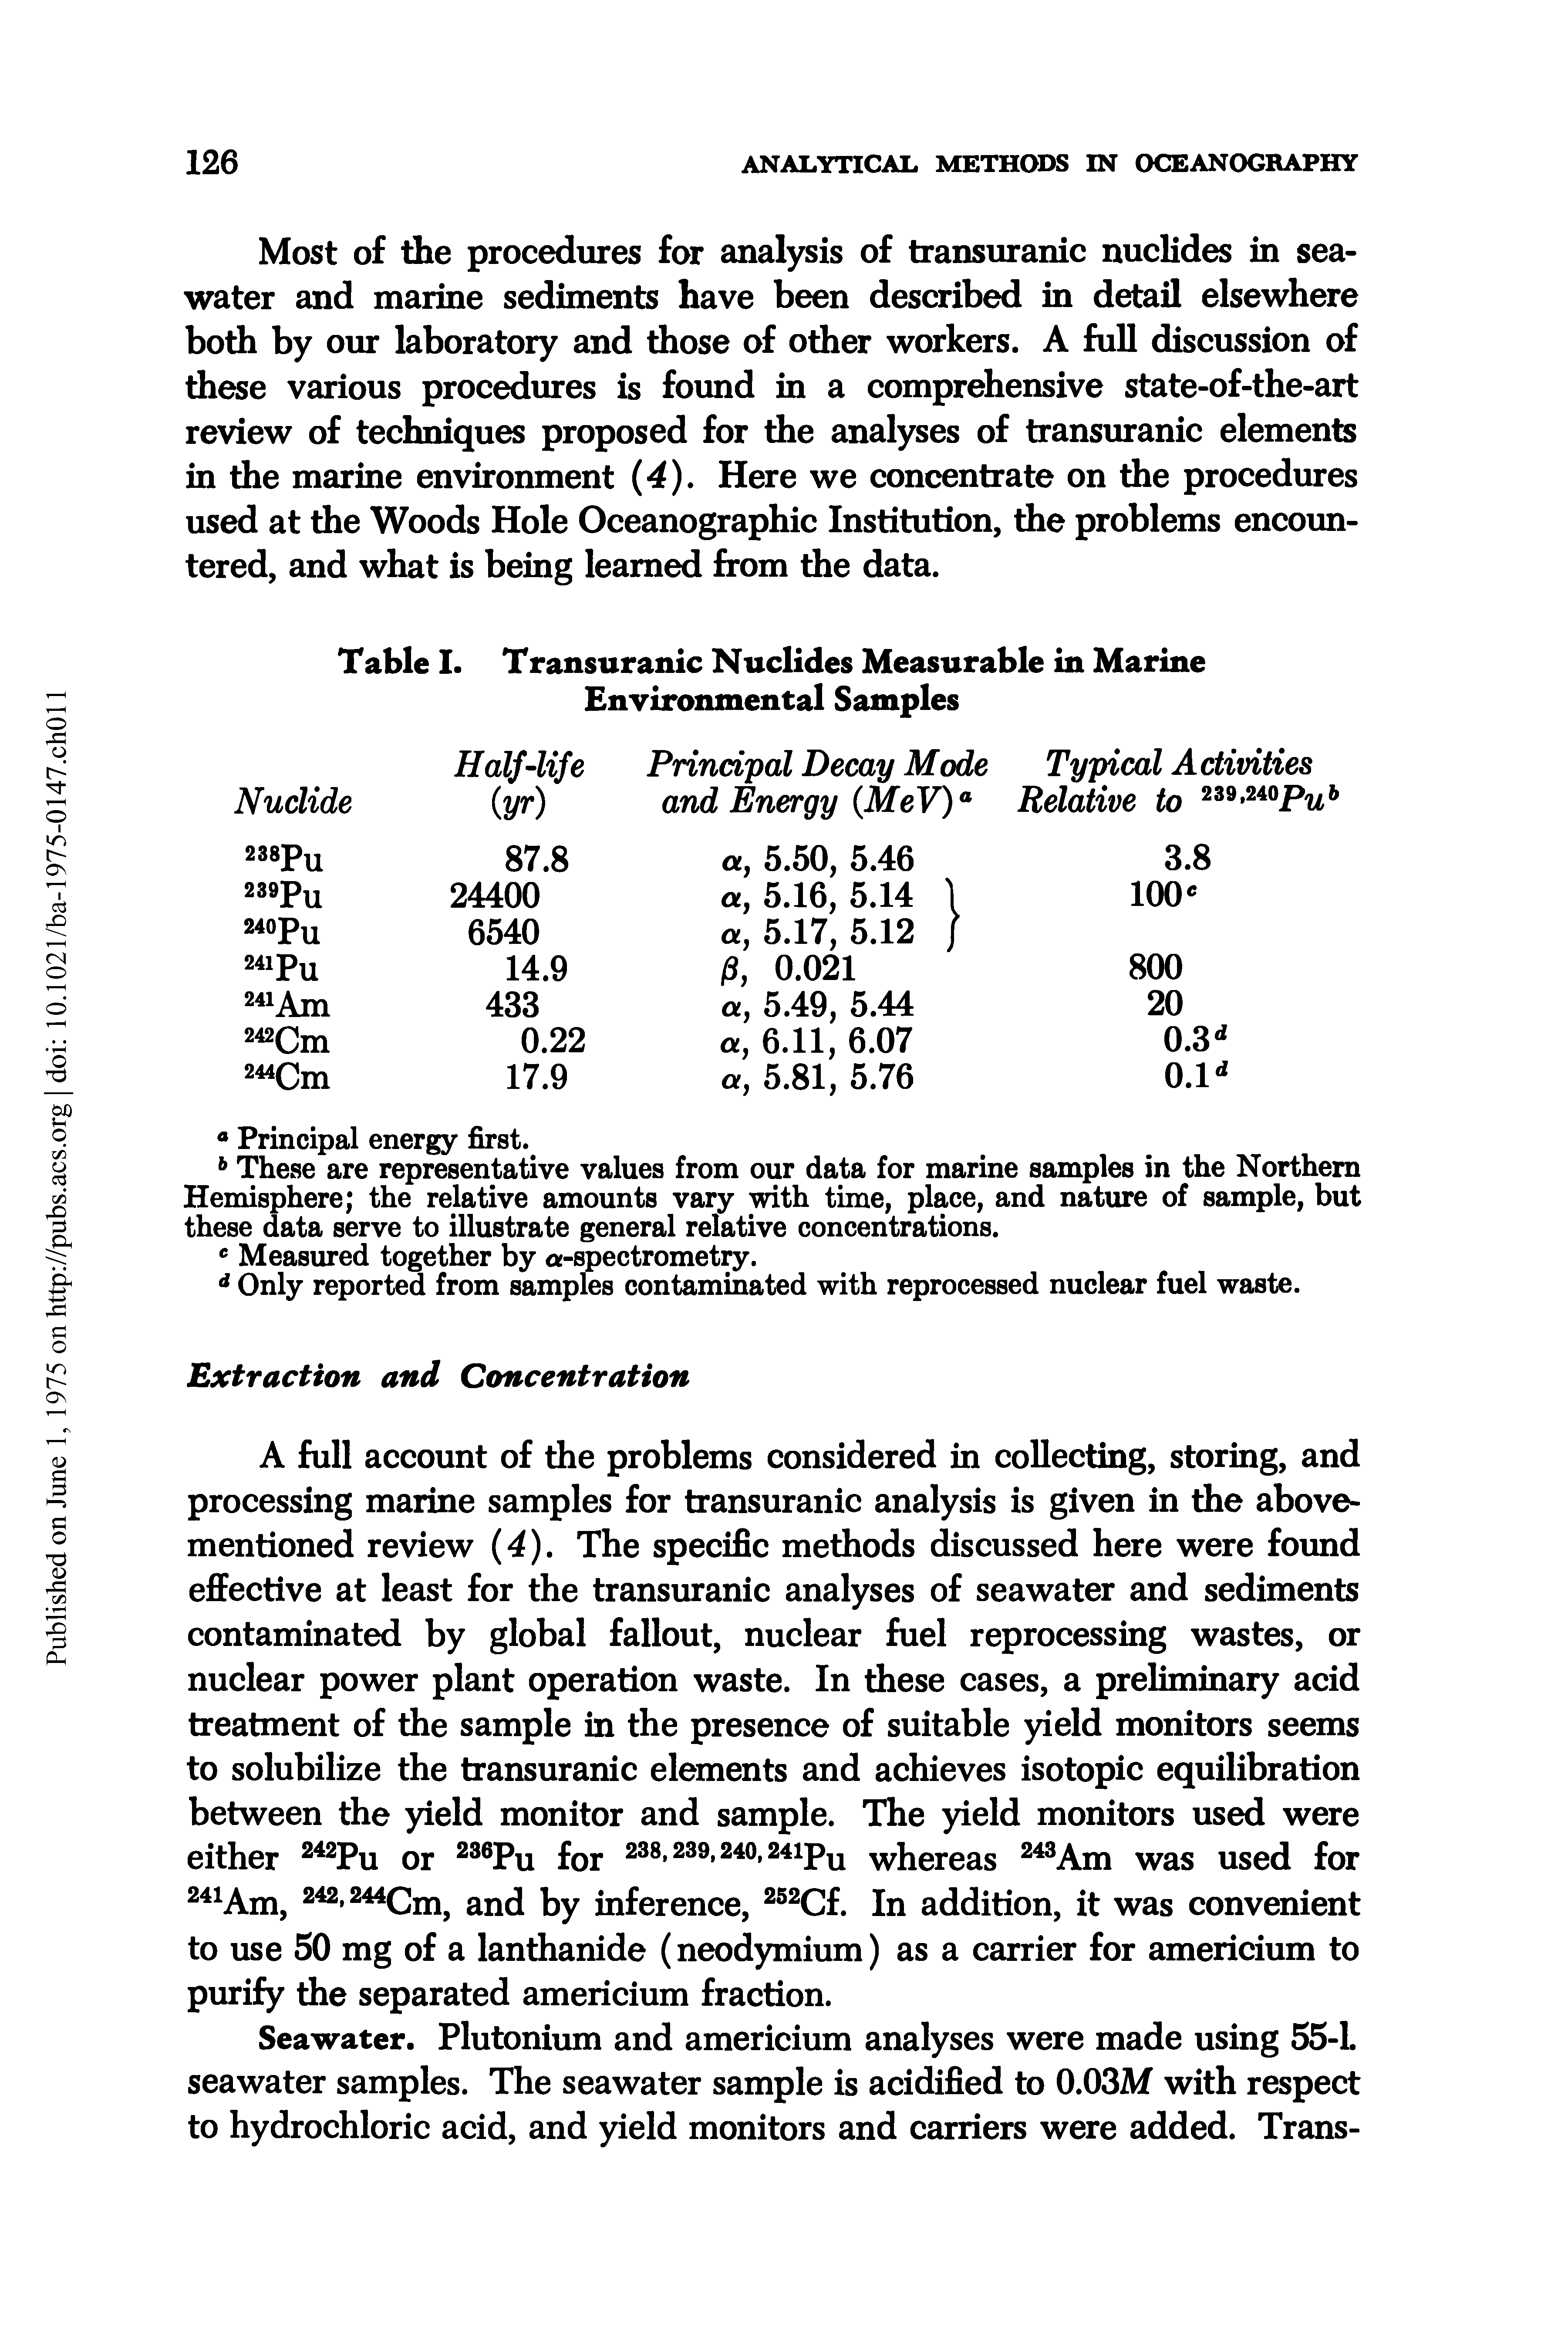 Table I. Transuranic Nuclides Measurable in Marine Environmental Samples...